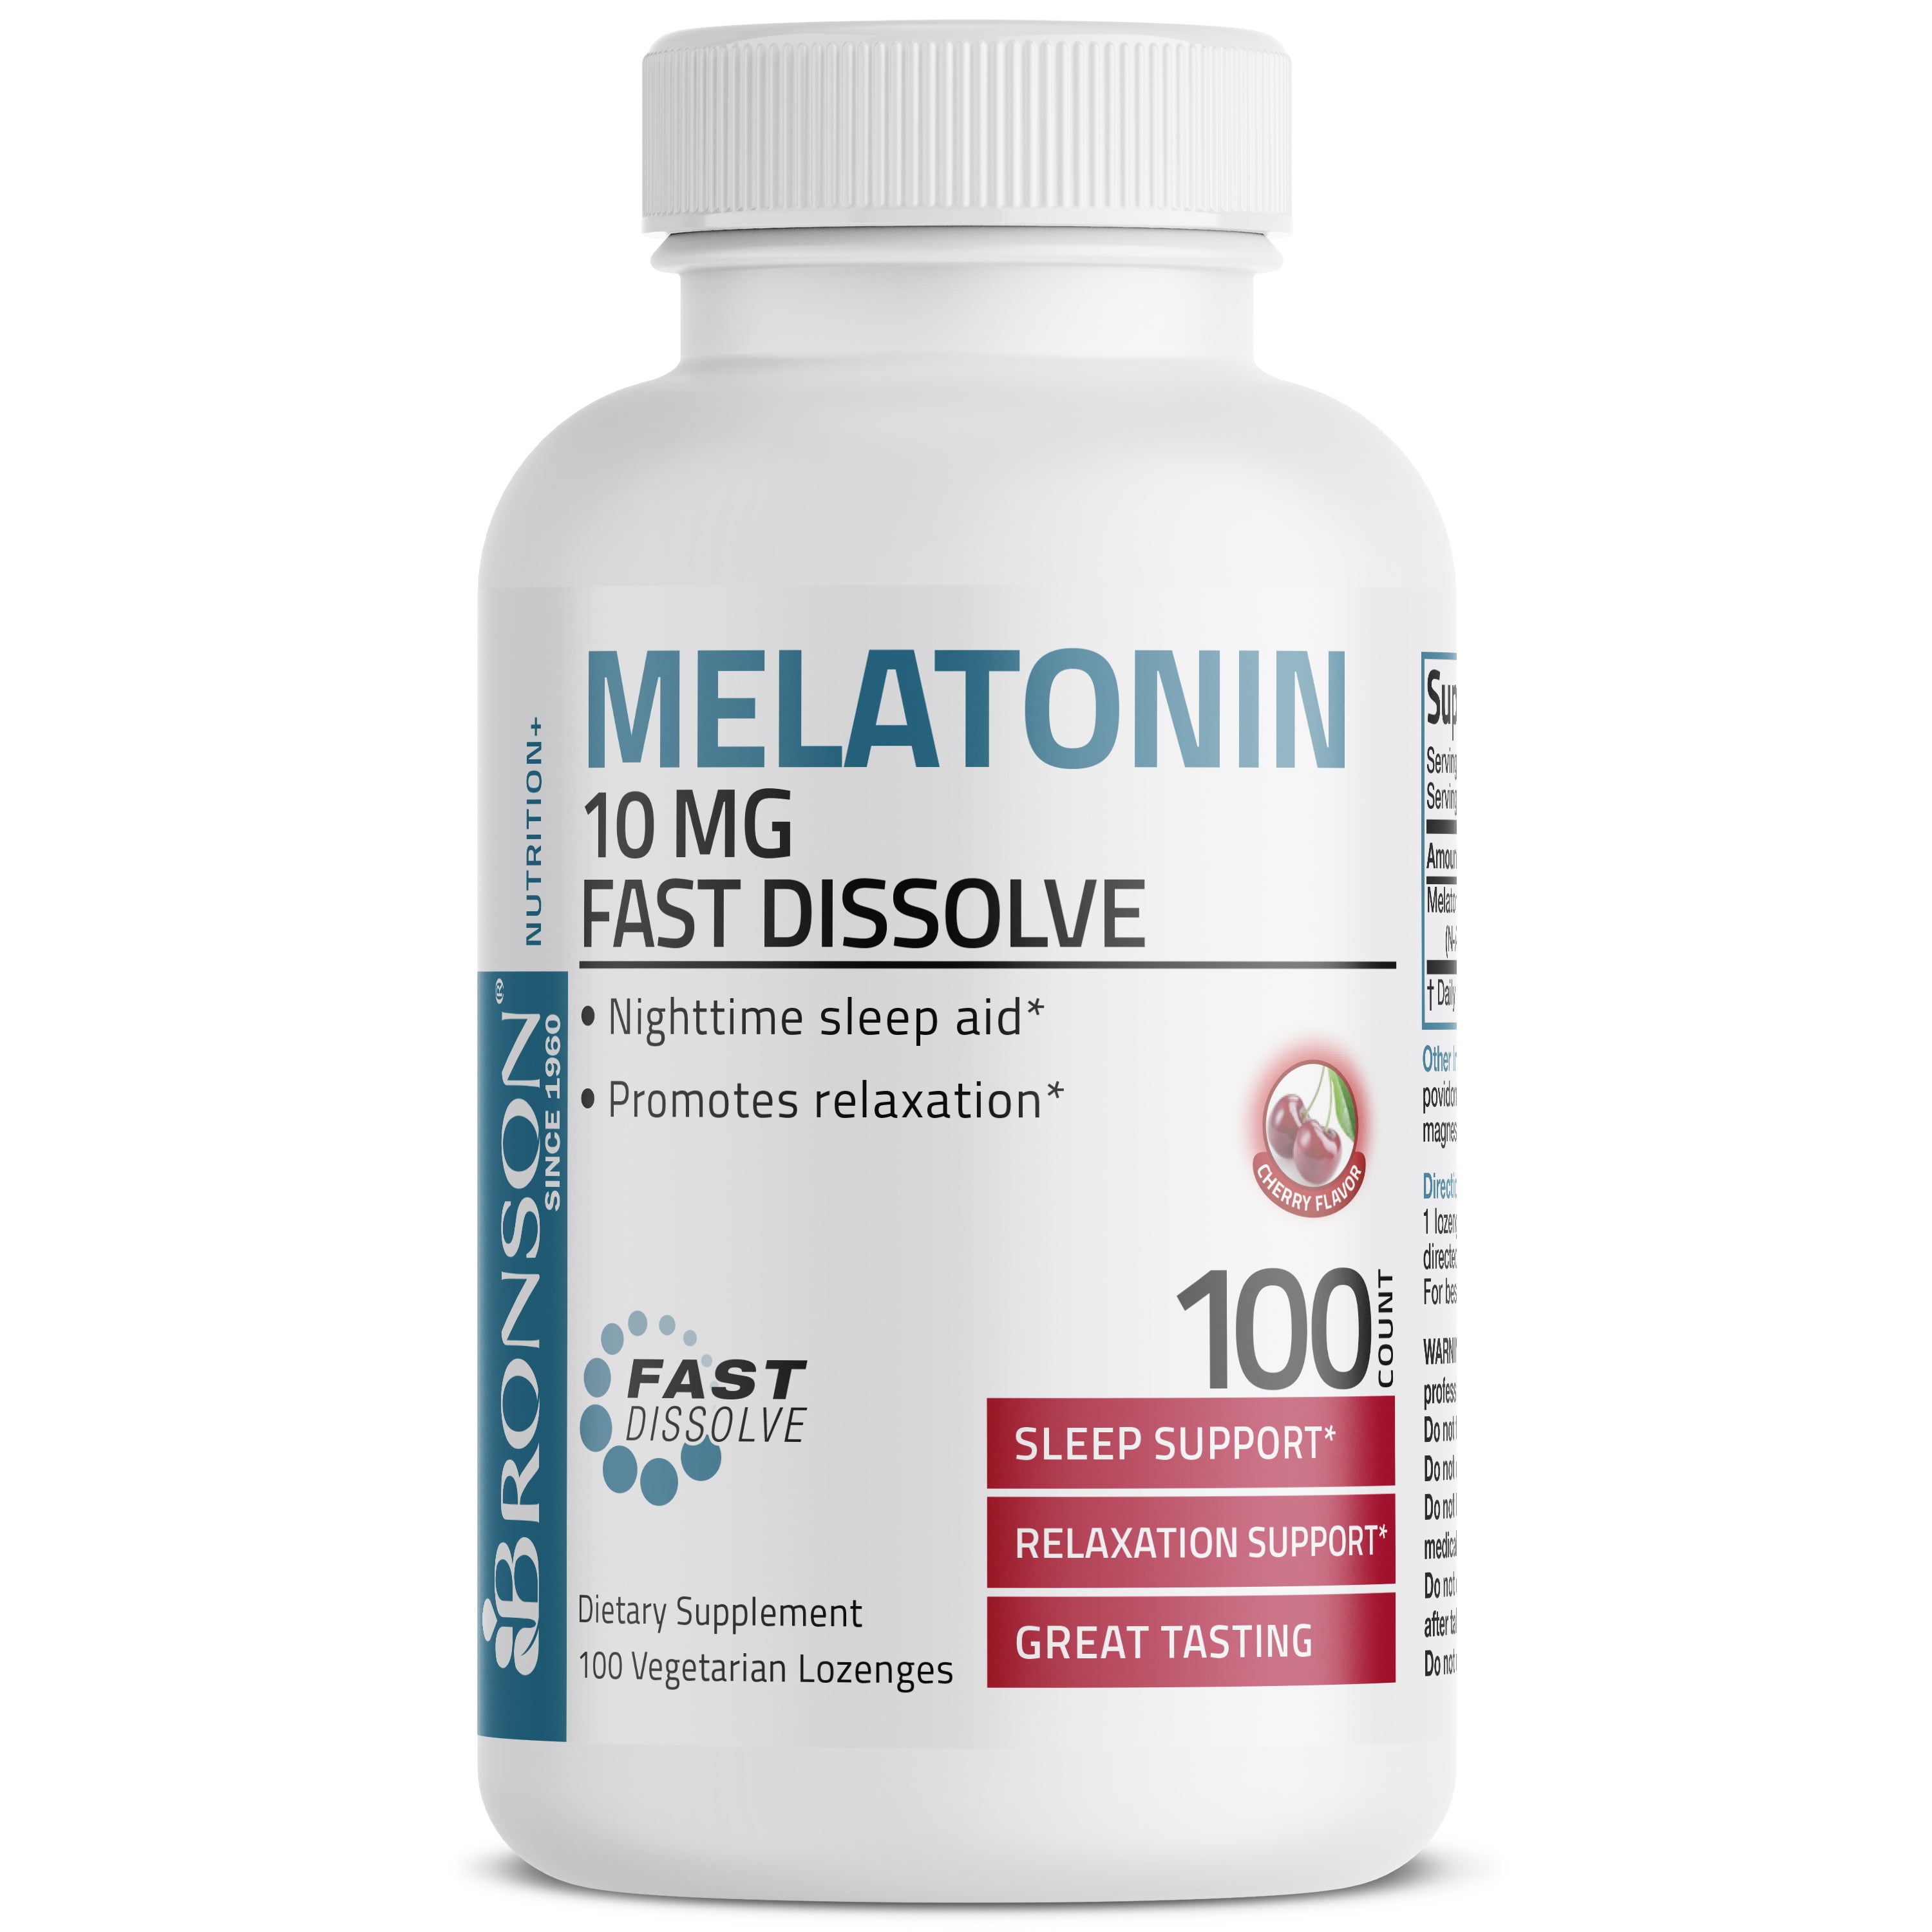 Melatonin Fast Dissolve - Cherry - 10 mg view 9 of 6